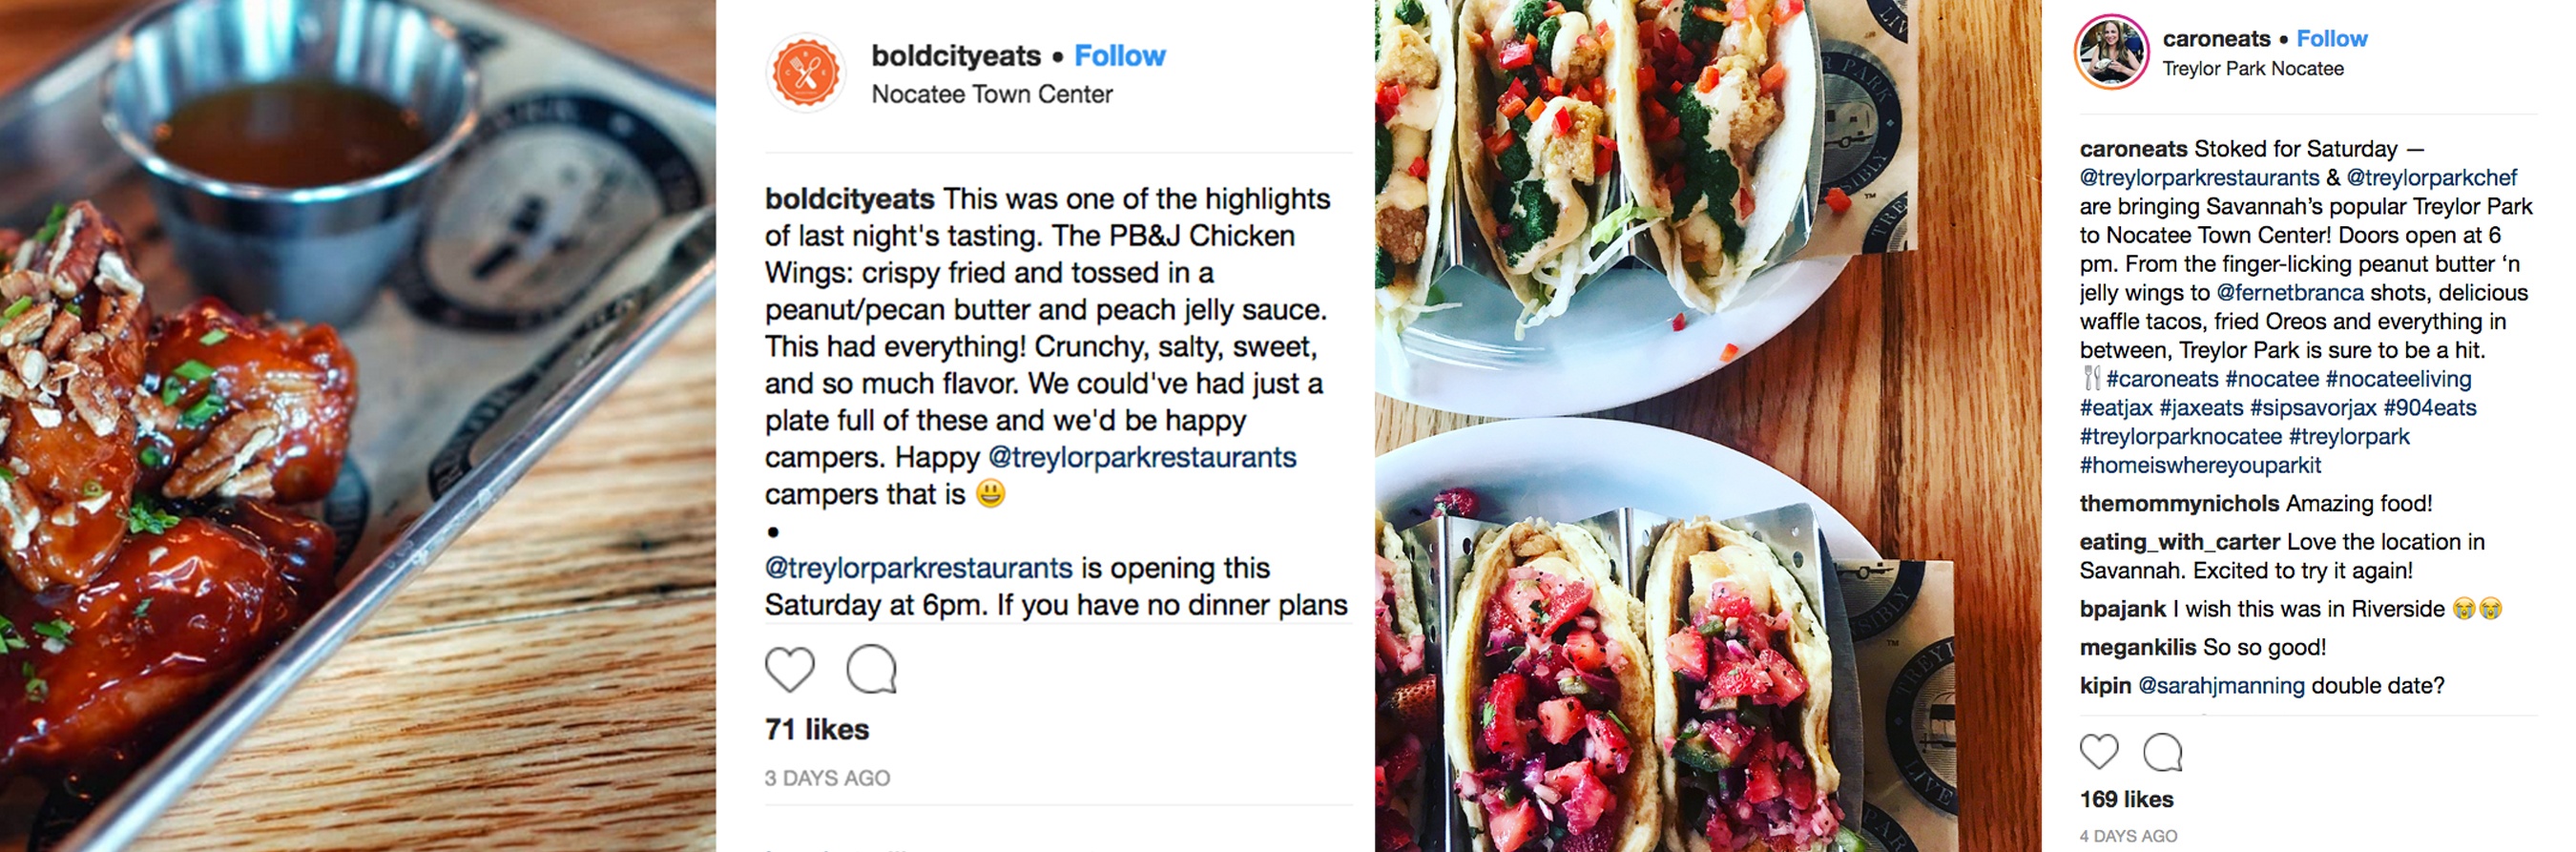 Instagram posts from instagram influencers promoting Treylor Park